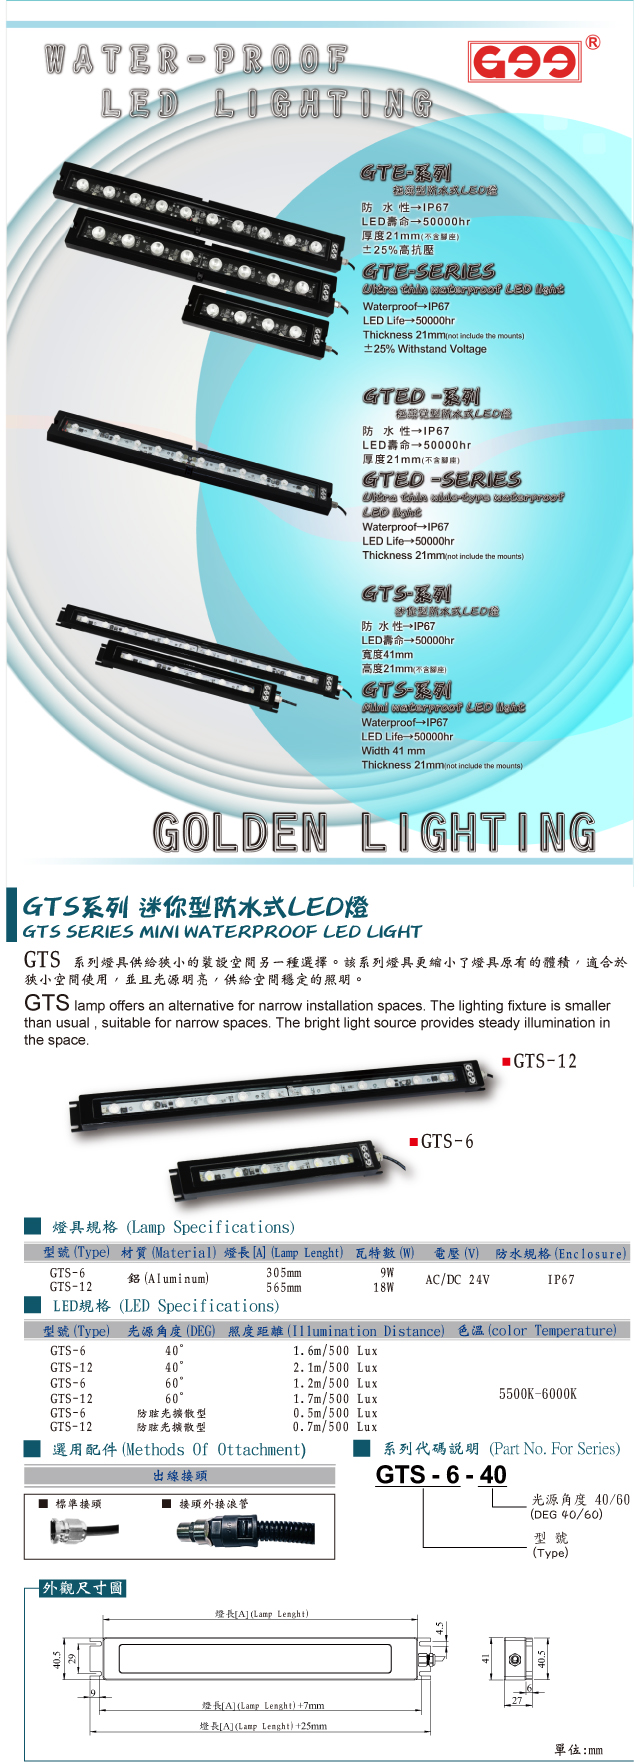 GTS series mini waterproof LED light